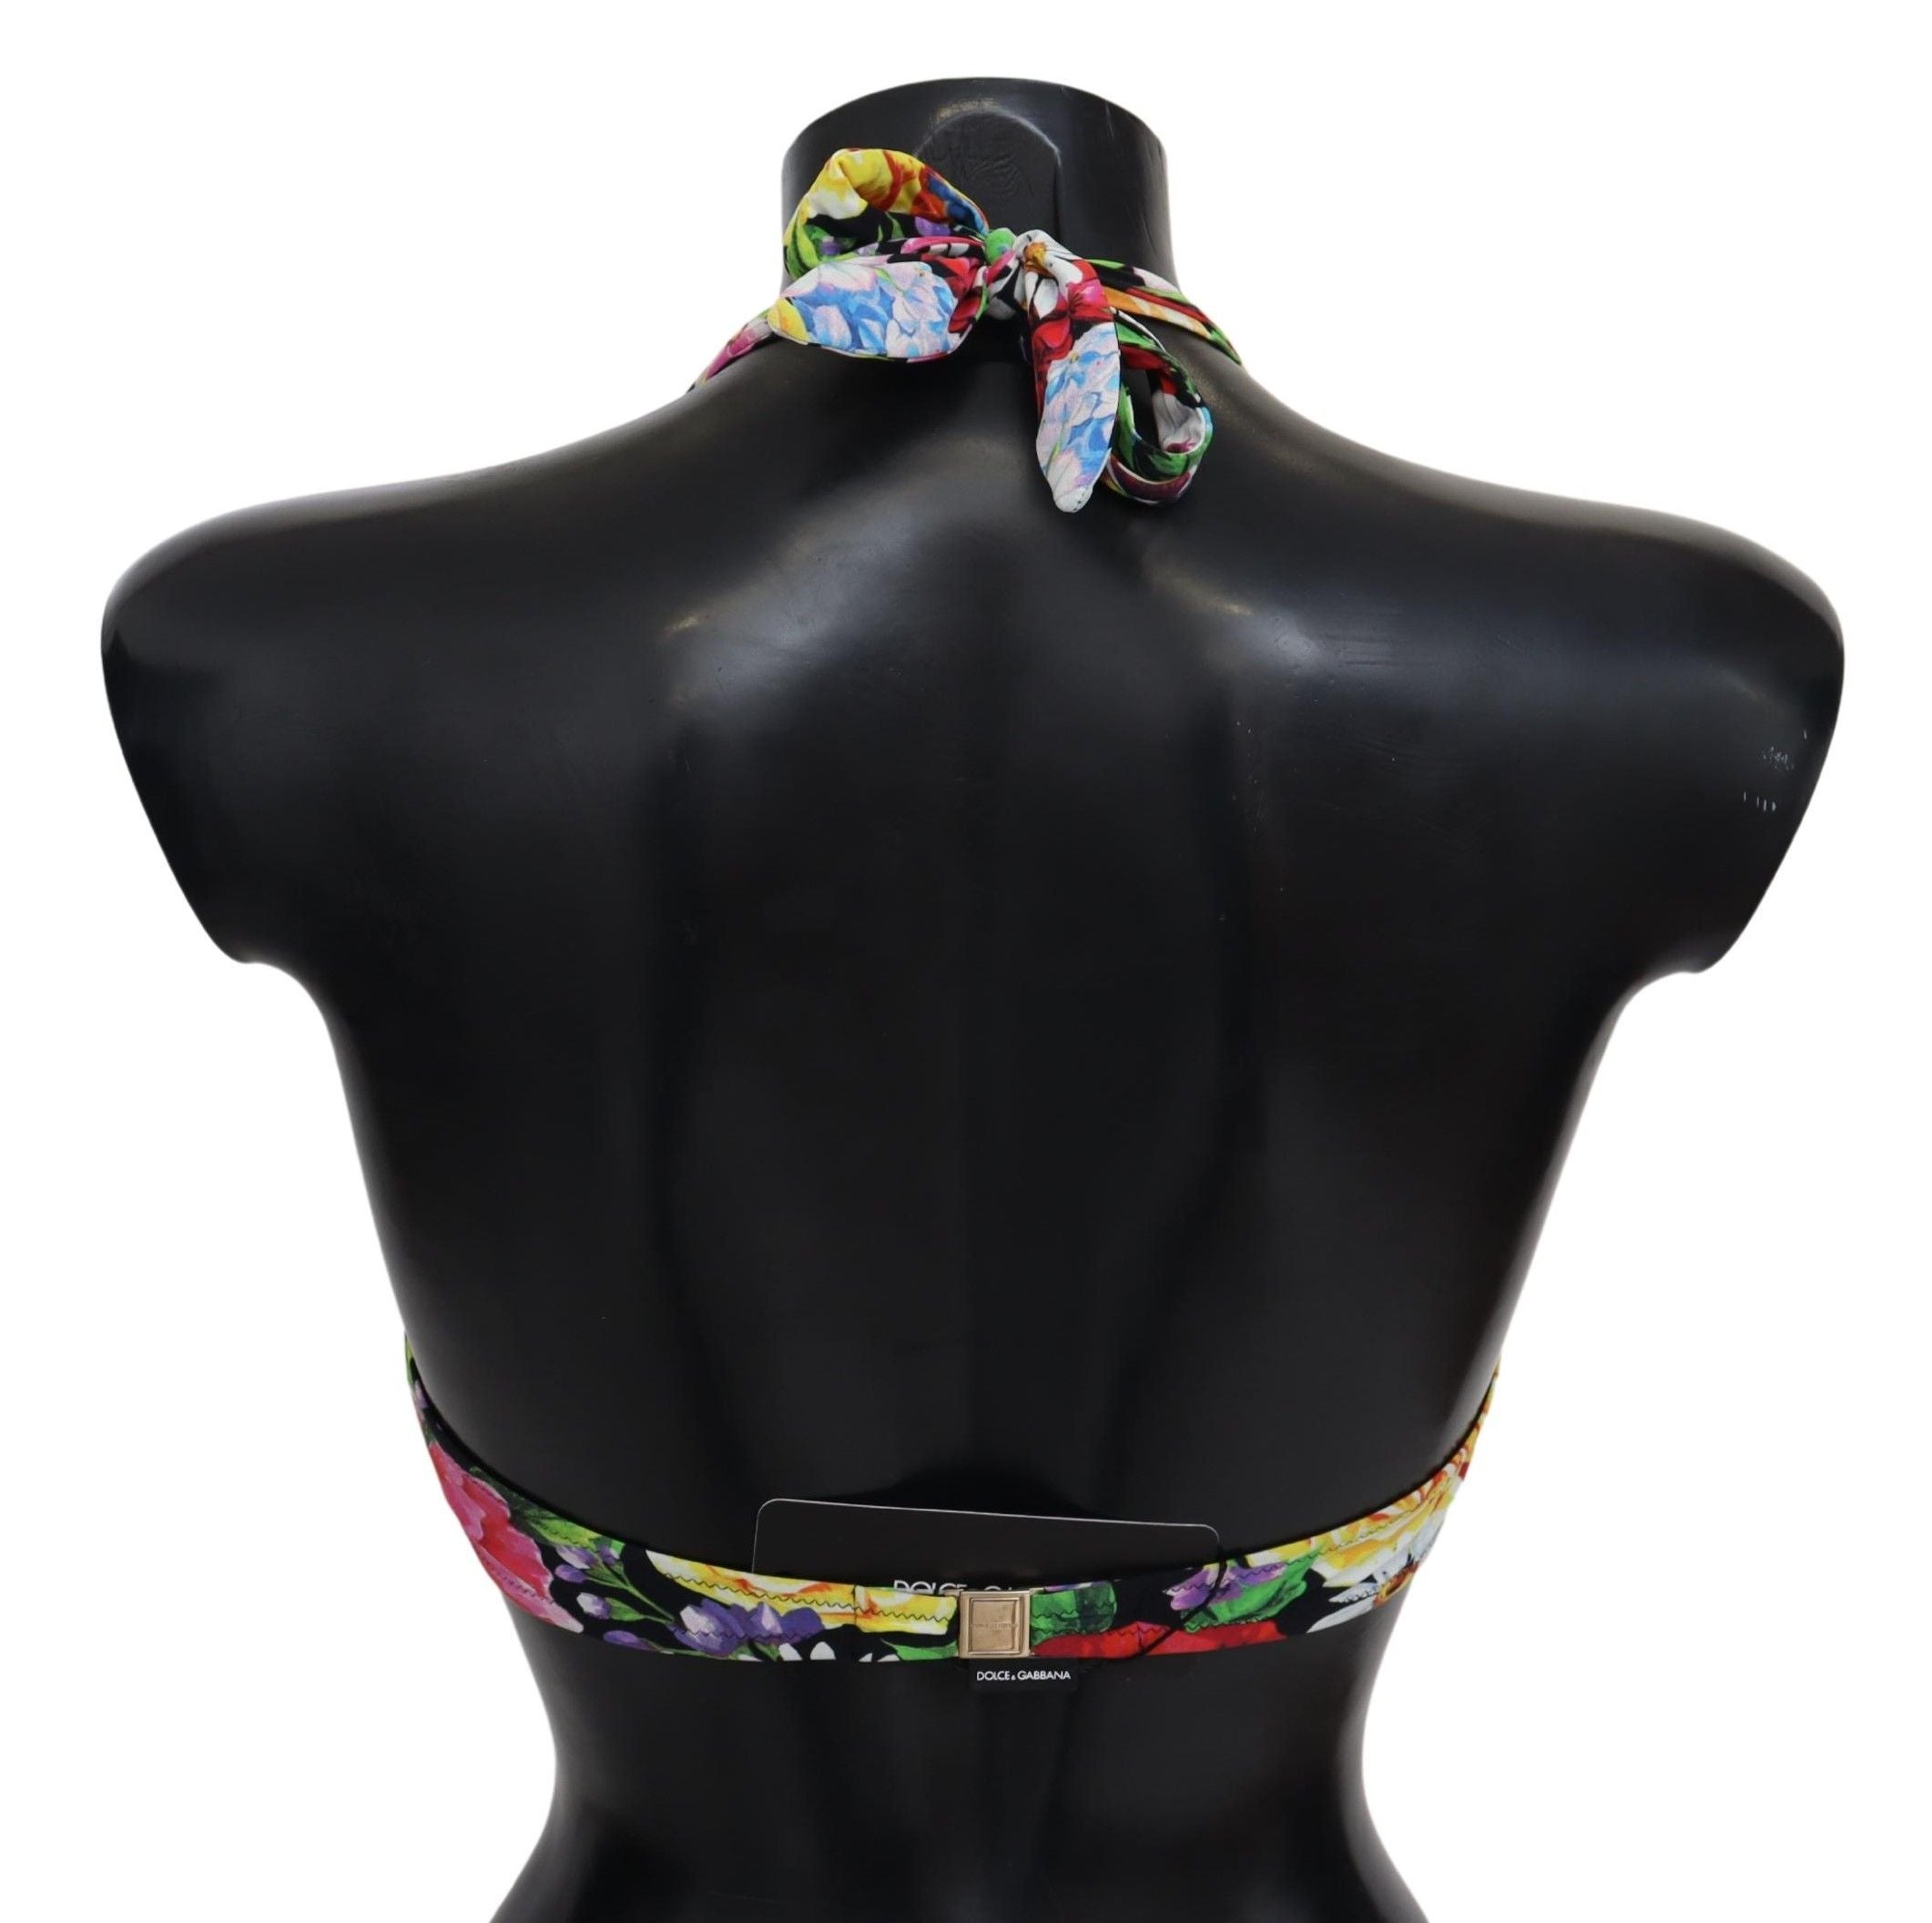 Dolce & Gabbana Multicolor Floral Print Swimwear Bikini Tops